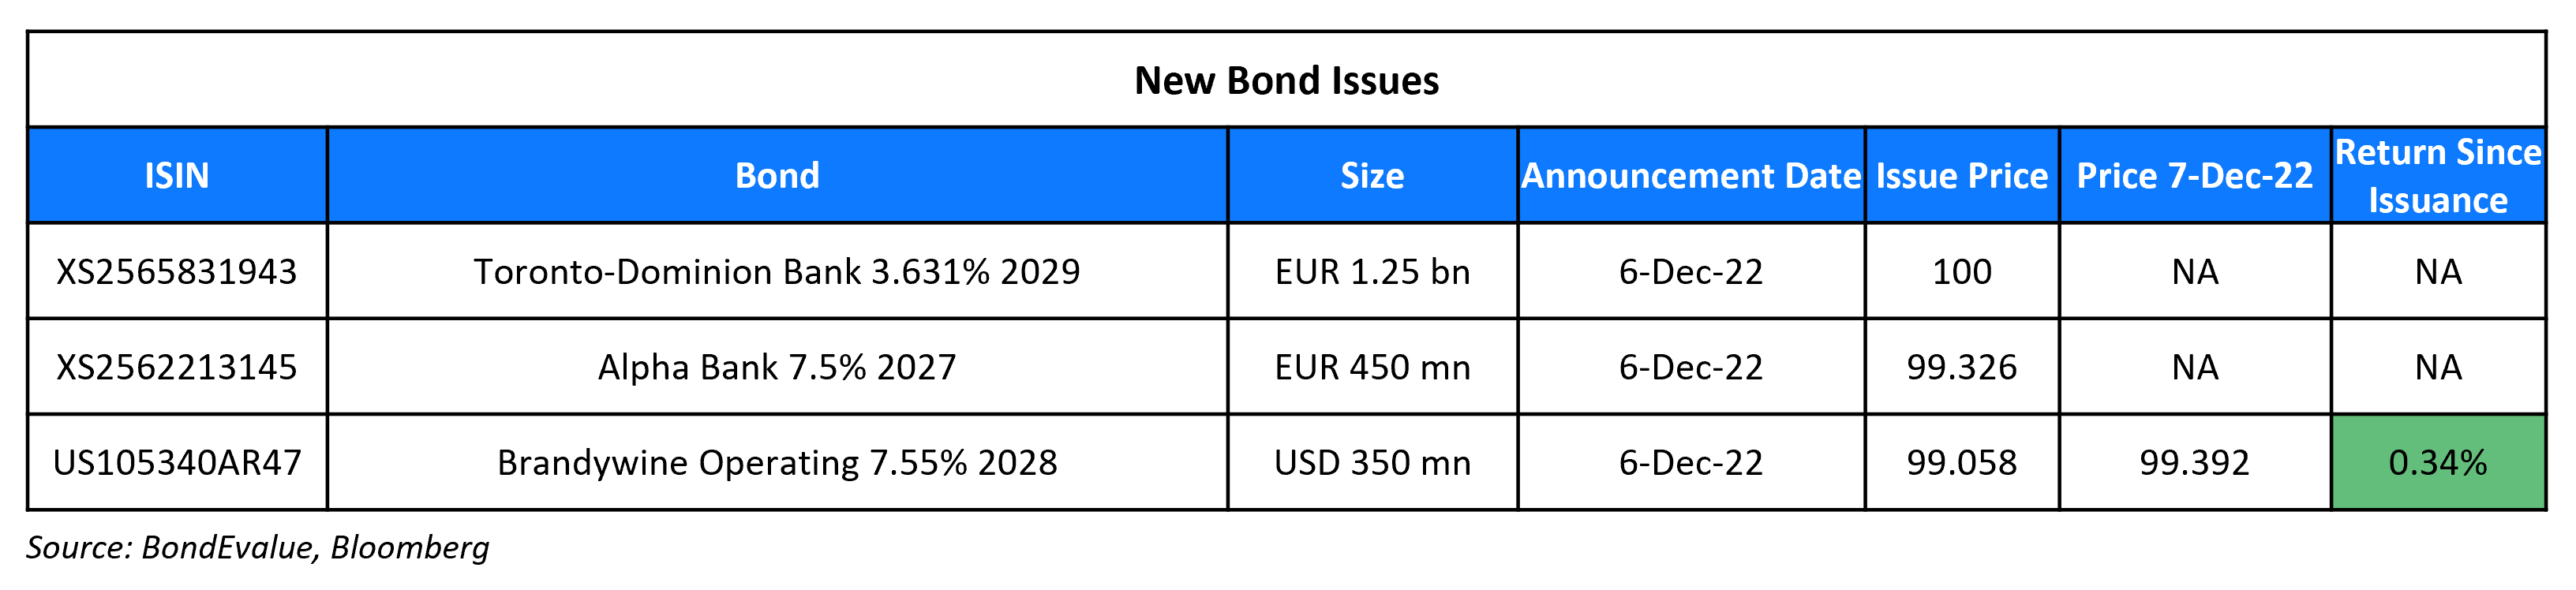 New Bond Issues 7 Dec 22